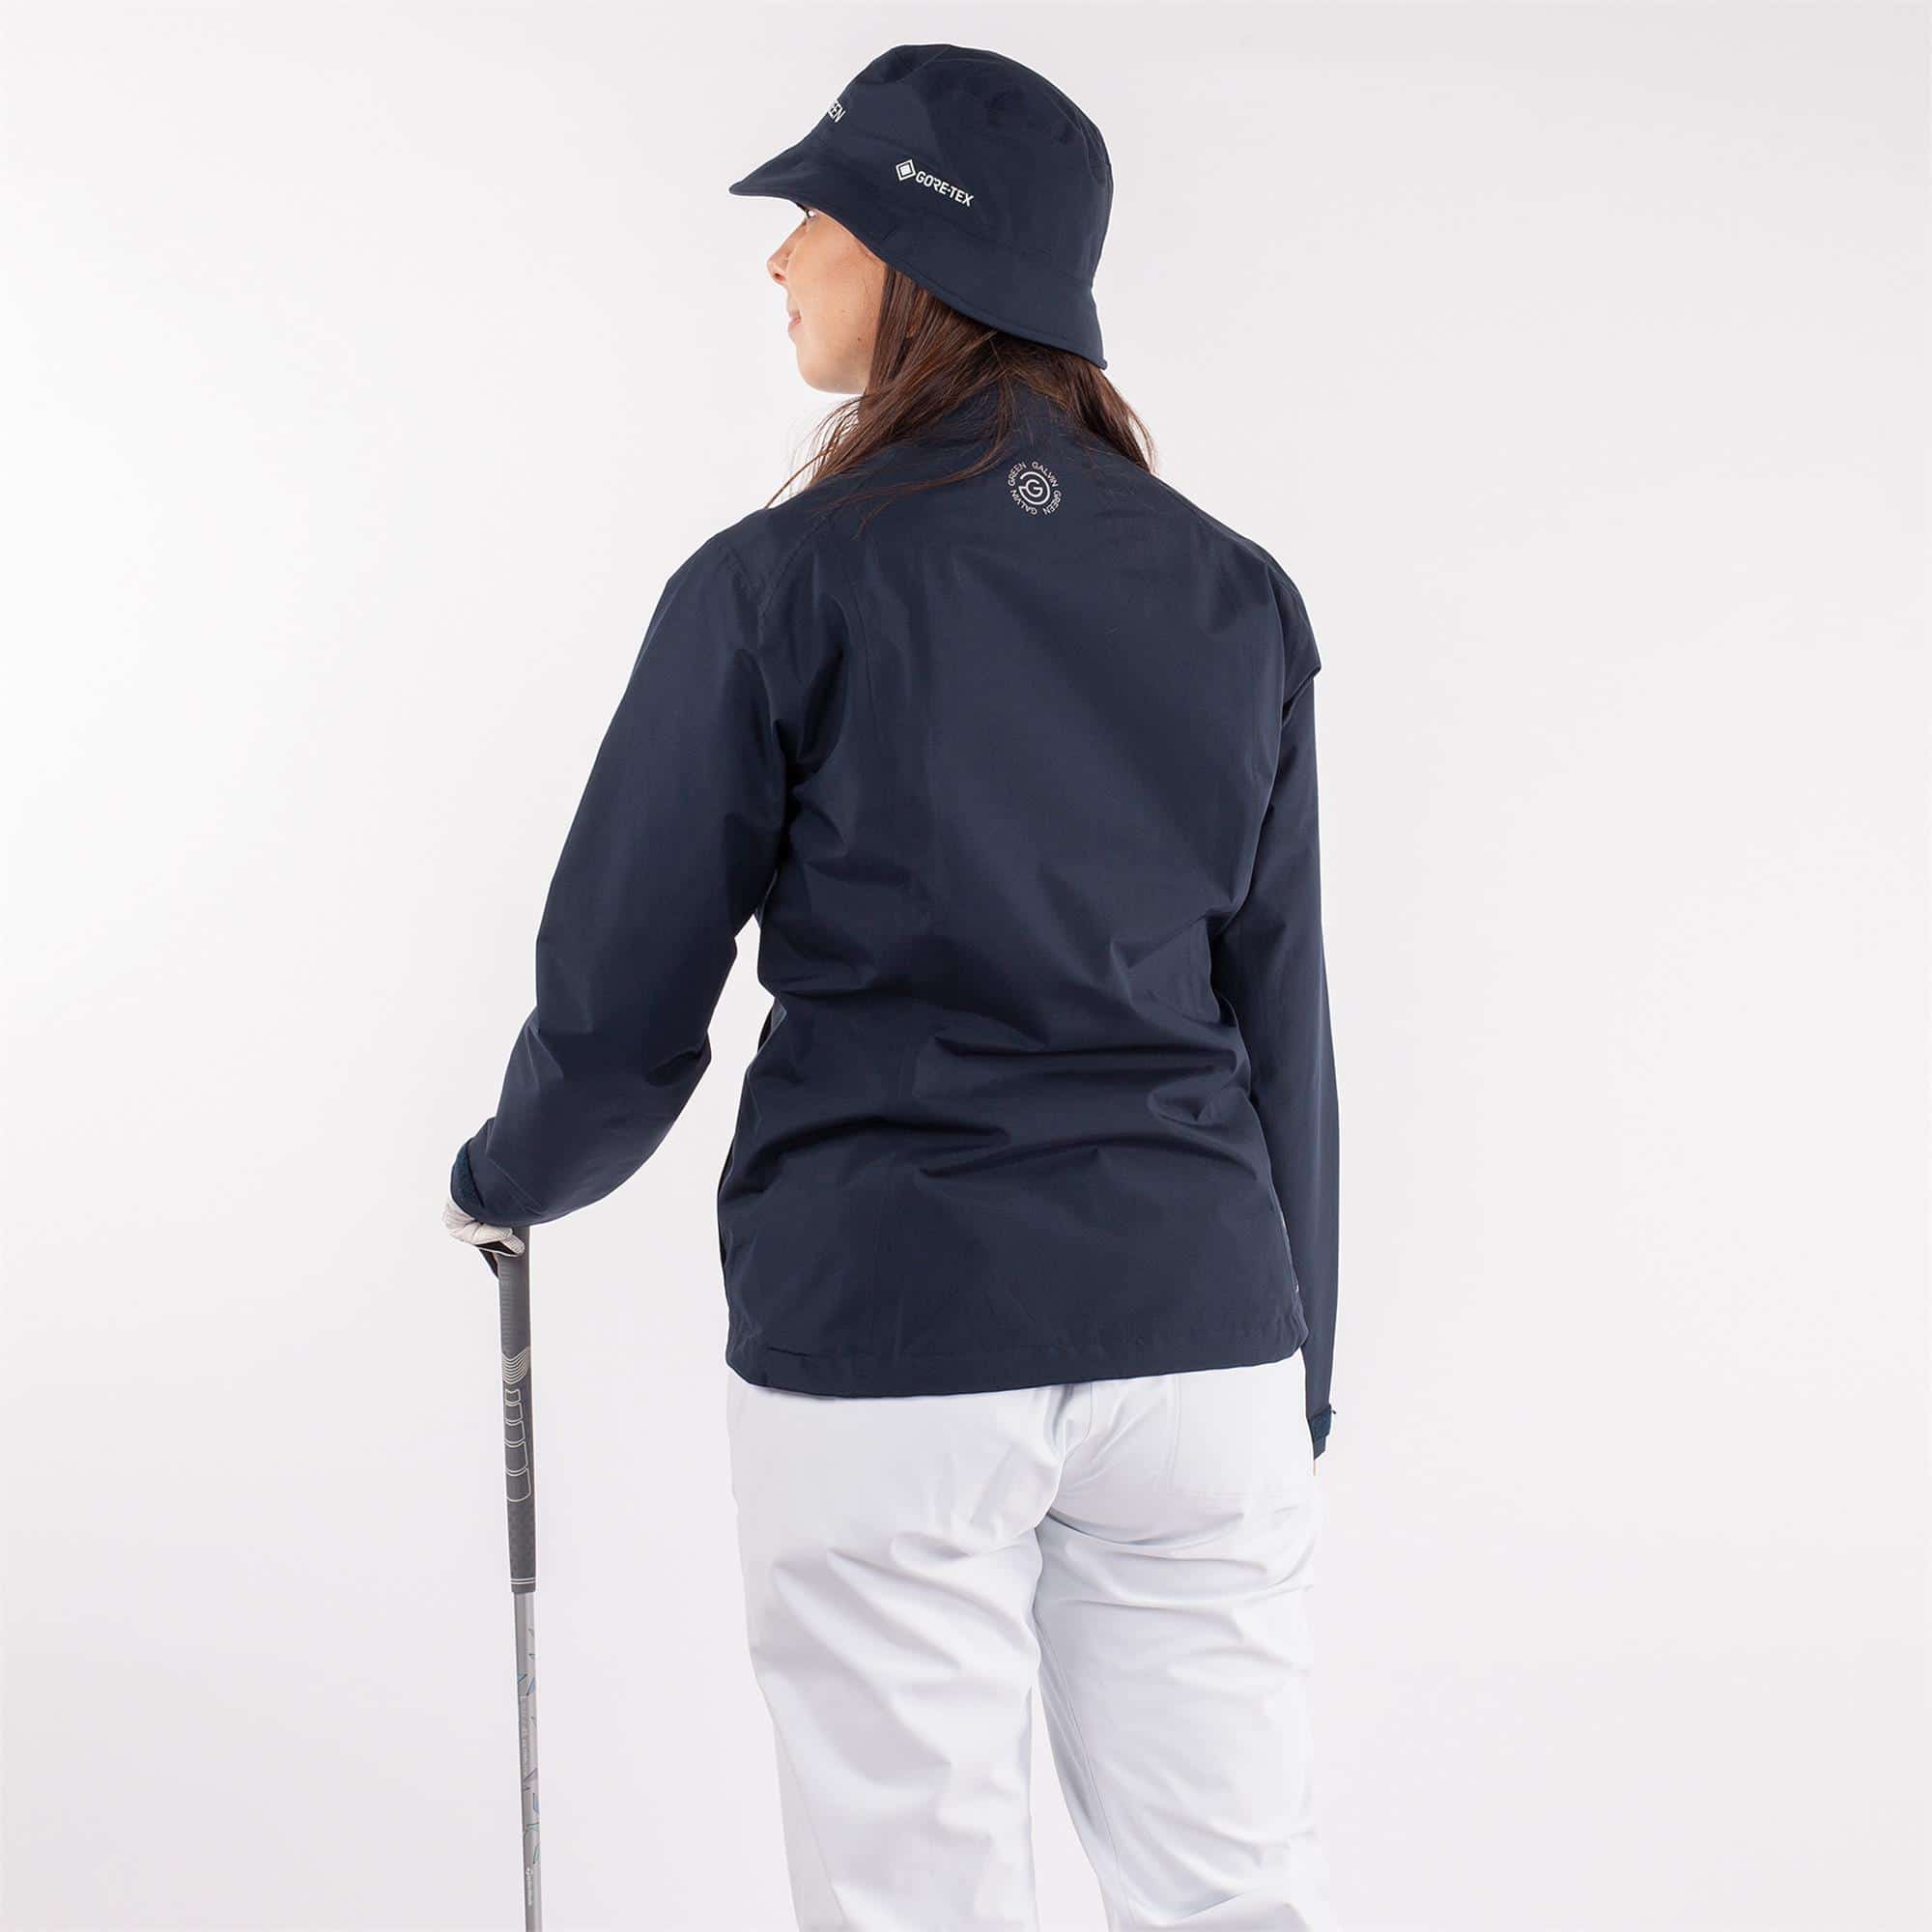 Galvin Green Gore-Tex Golf Rain Jacket BROOK HOLLOW Women's Small Juniors  Medium